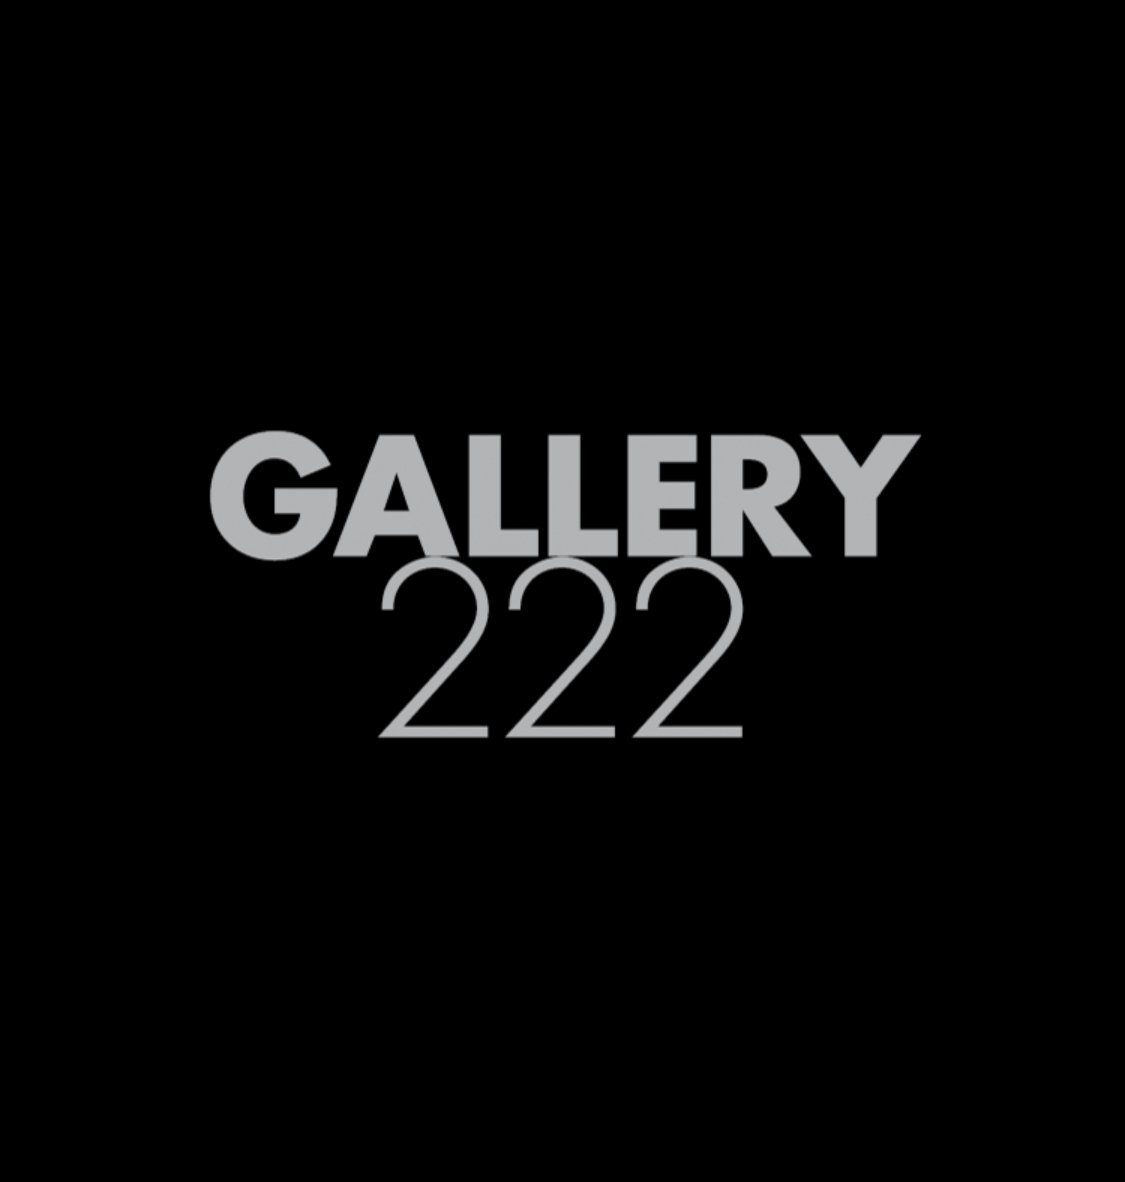 Gallery 222